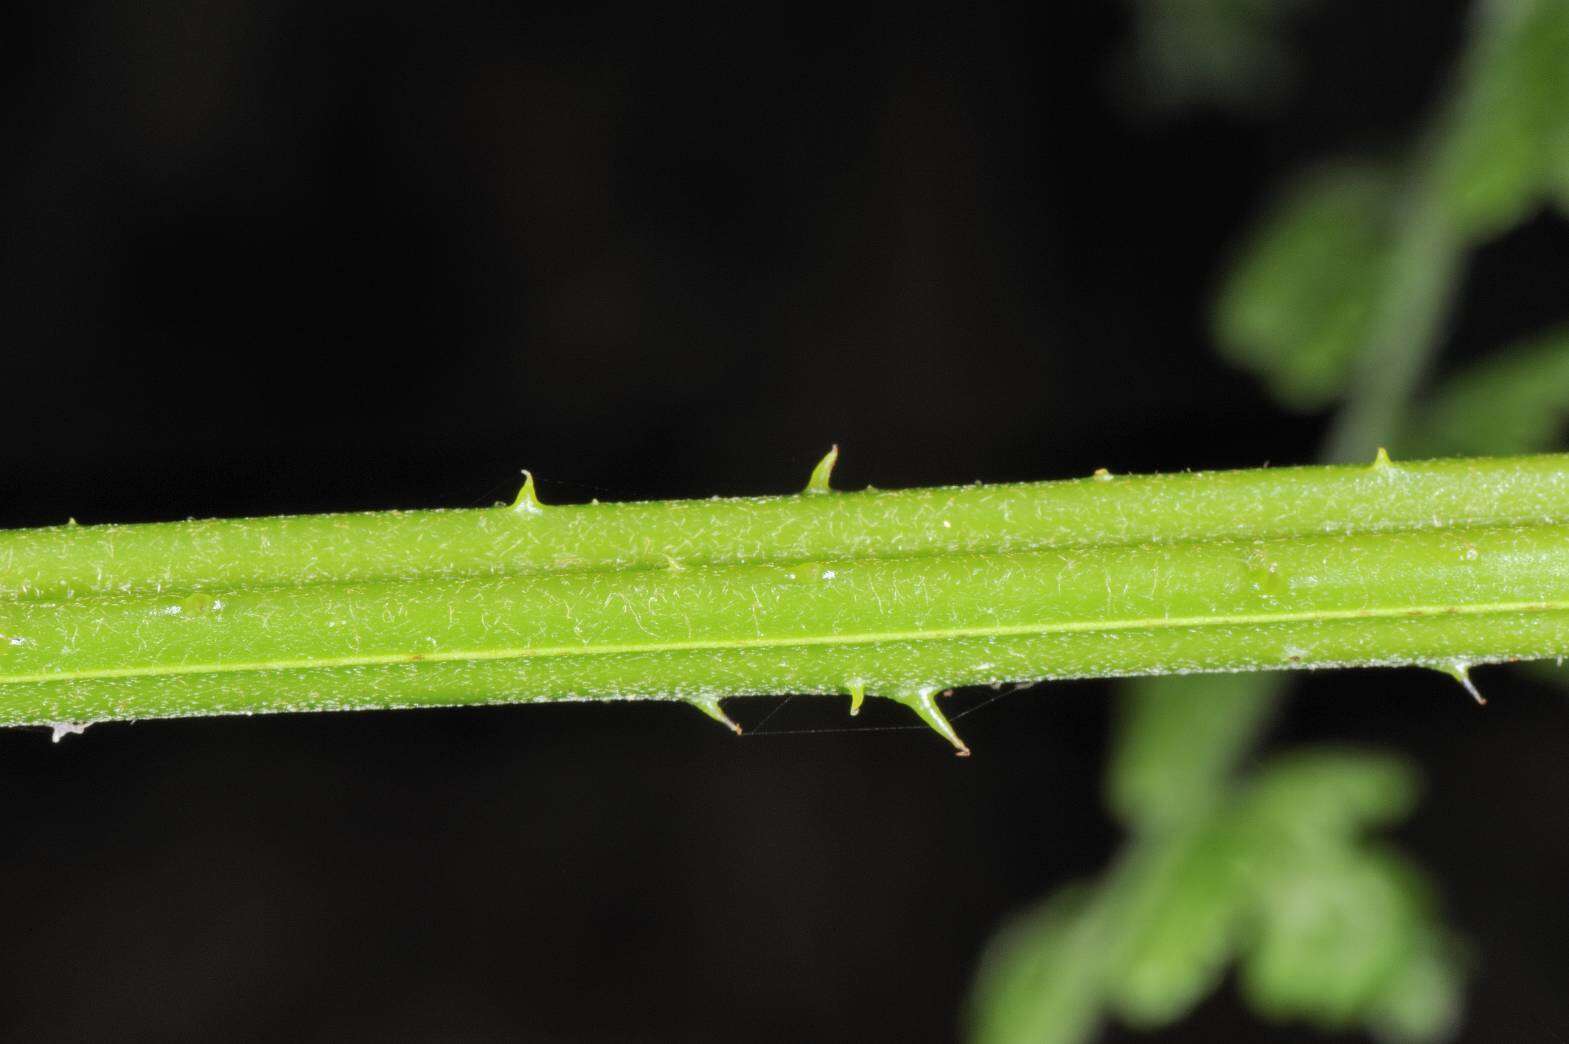 Image of Dennstaedtia scandens (Bl.) Moore